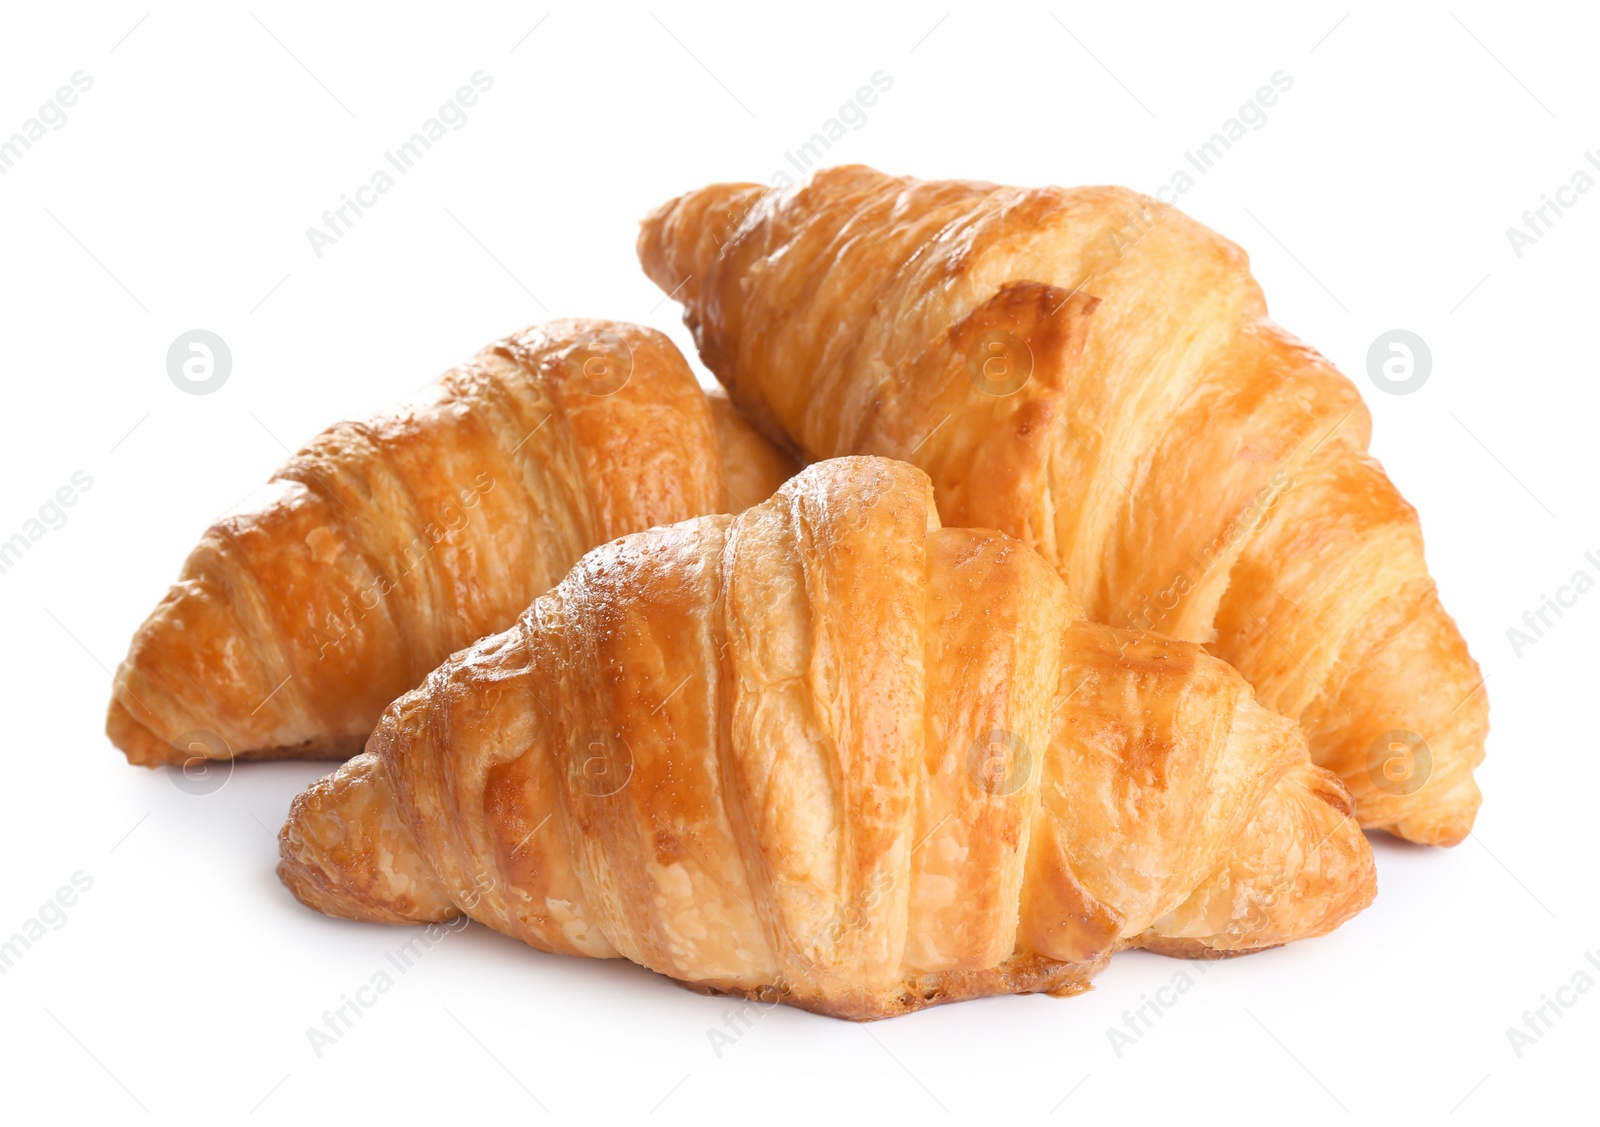 Photo of Fresh tasty croissants on white background. French pastry